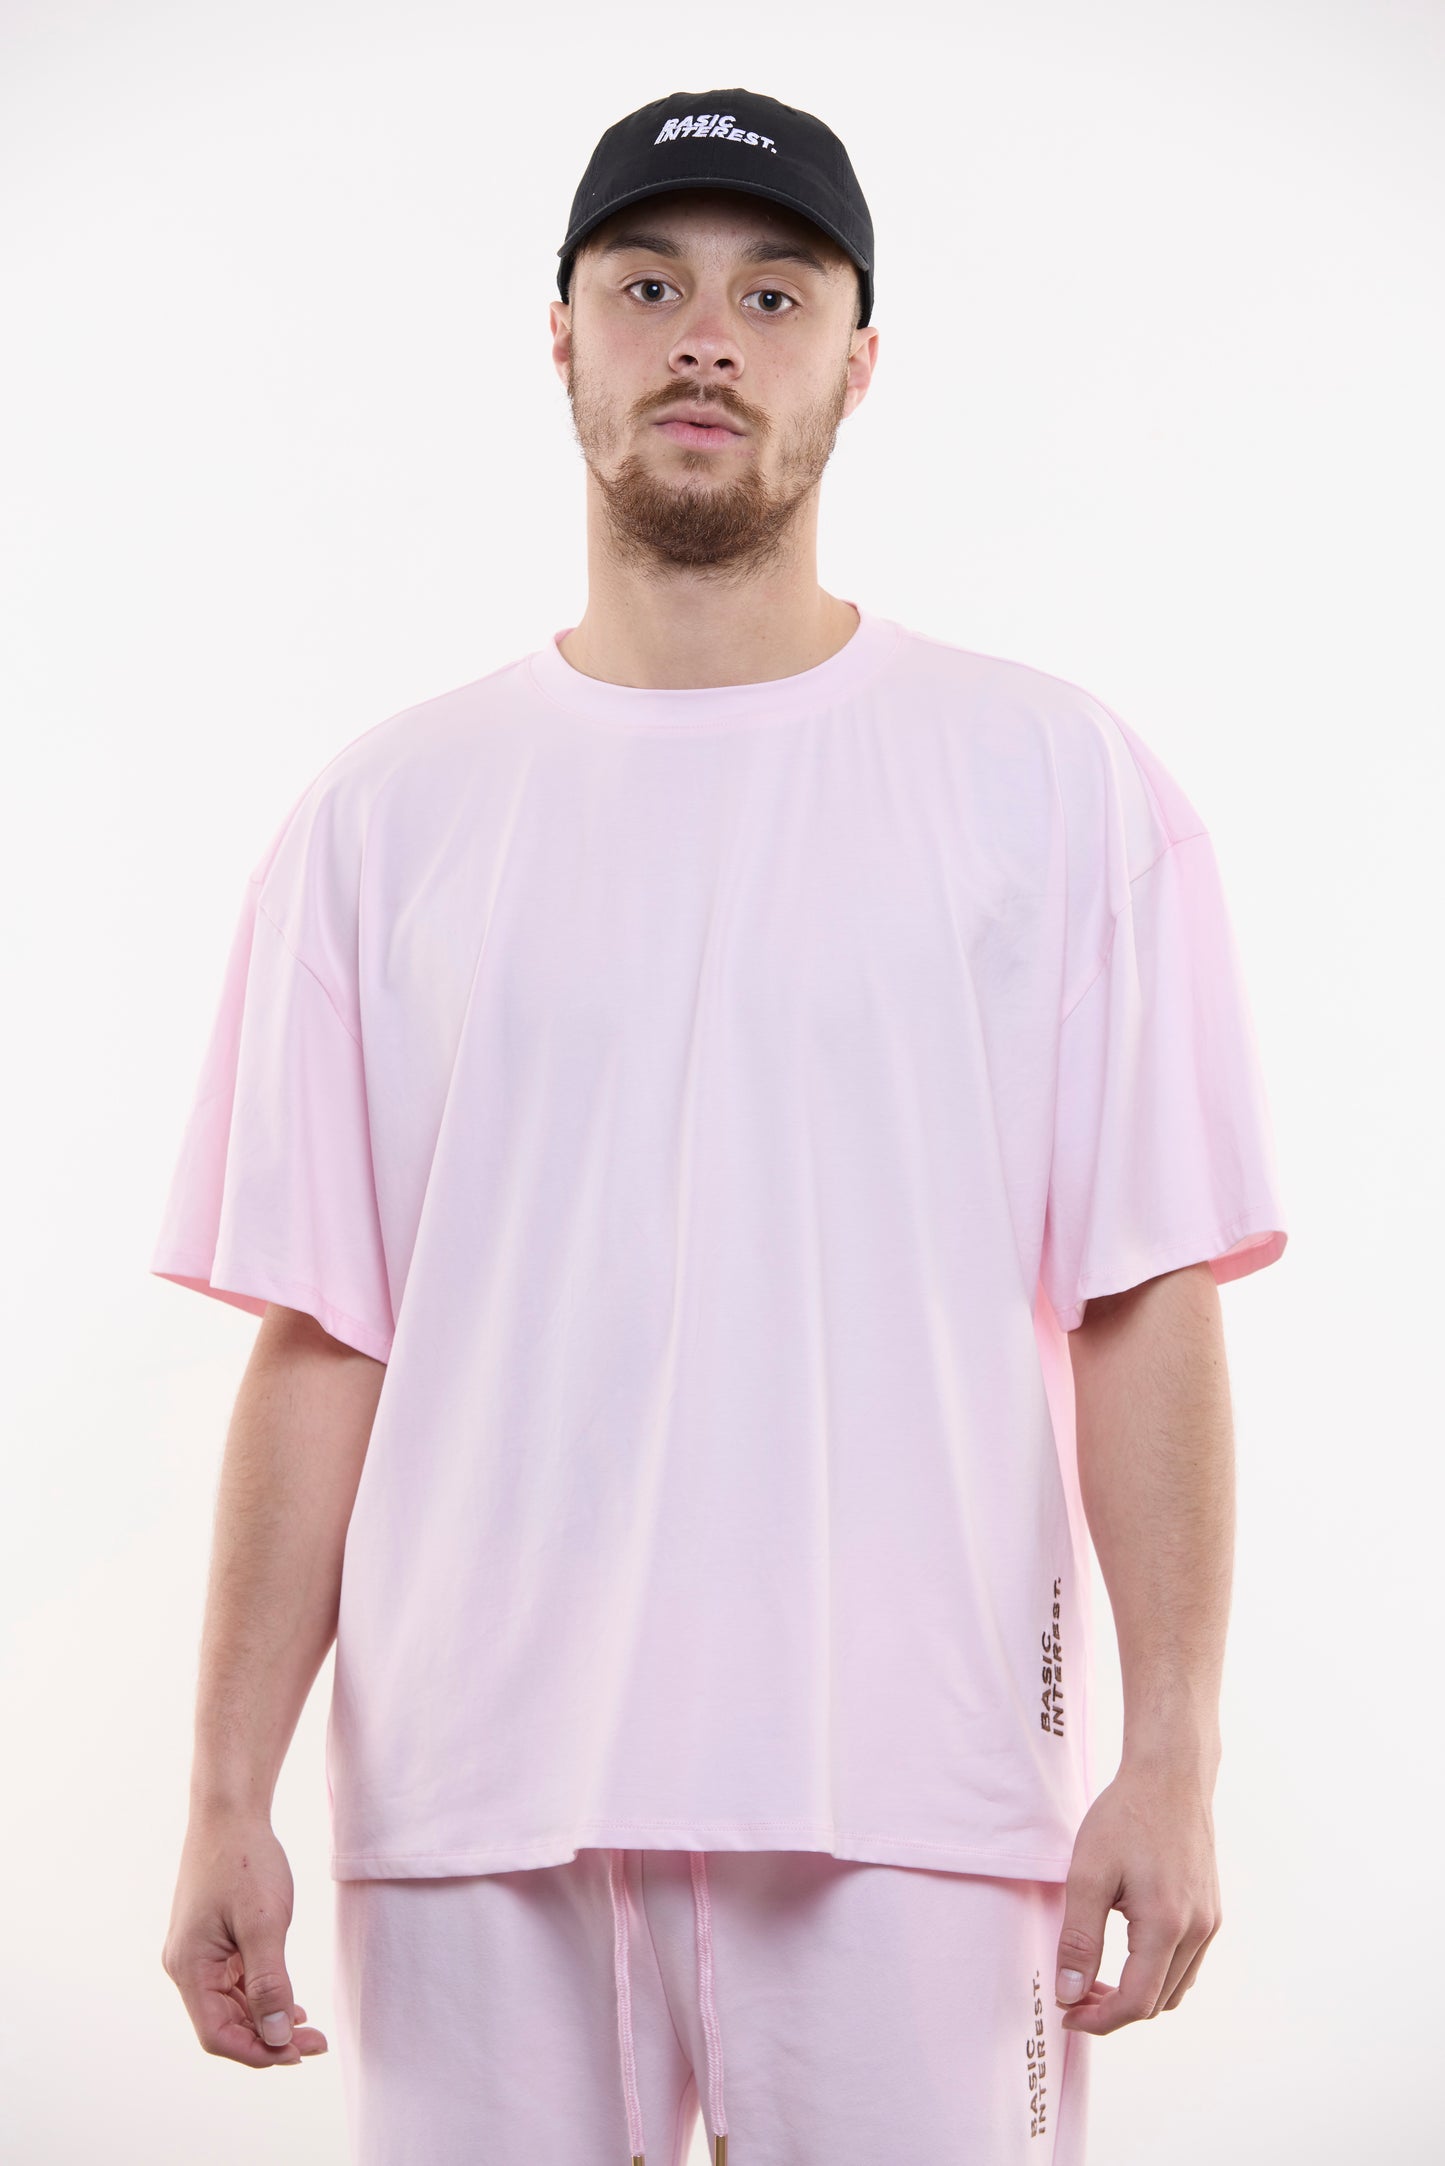 Blush pink oversized t-shirt with black BASIC INTEREST embroidery